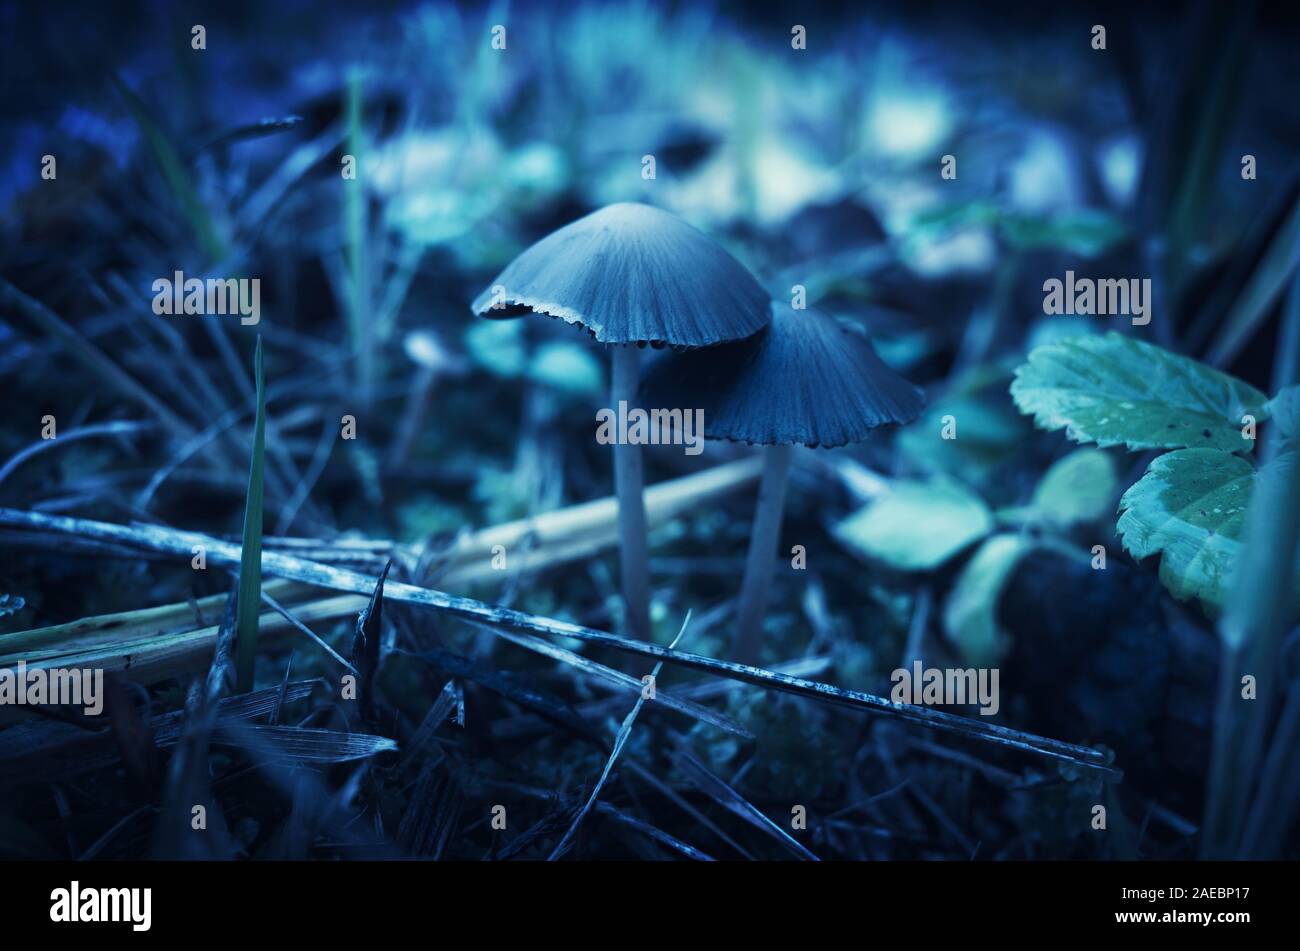 Magic mushrooms, close-up blue toned photo with selective focus Stock Photo